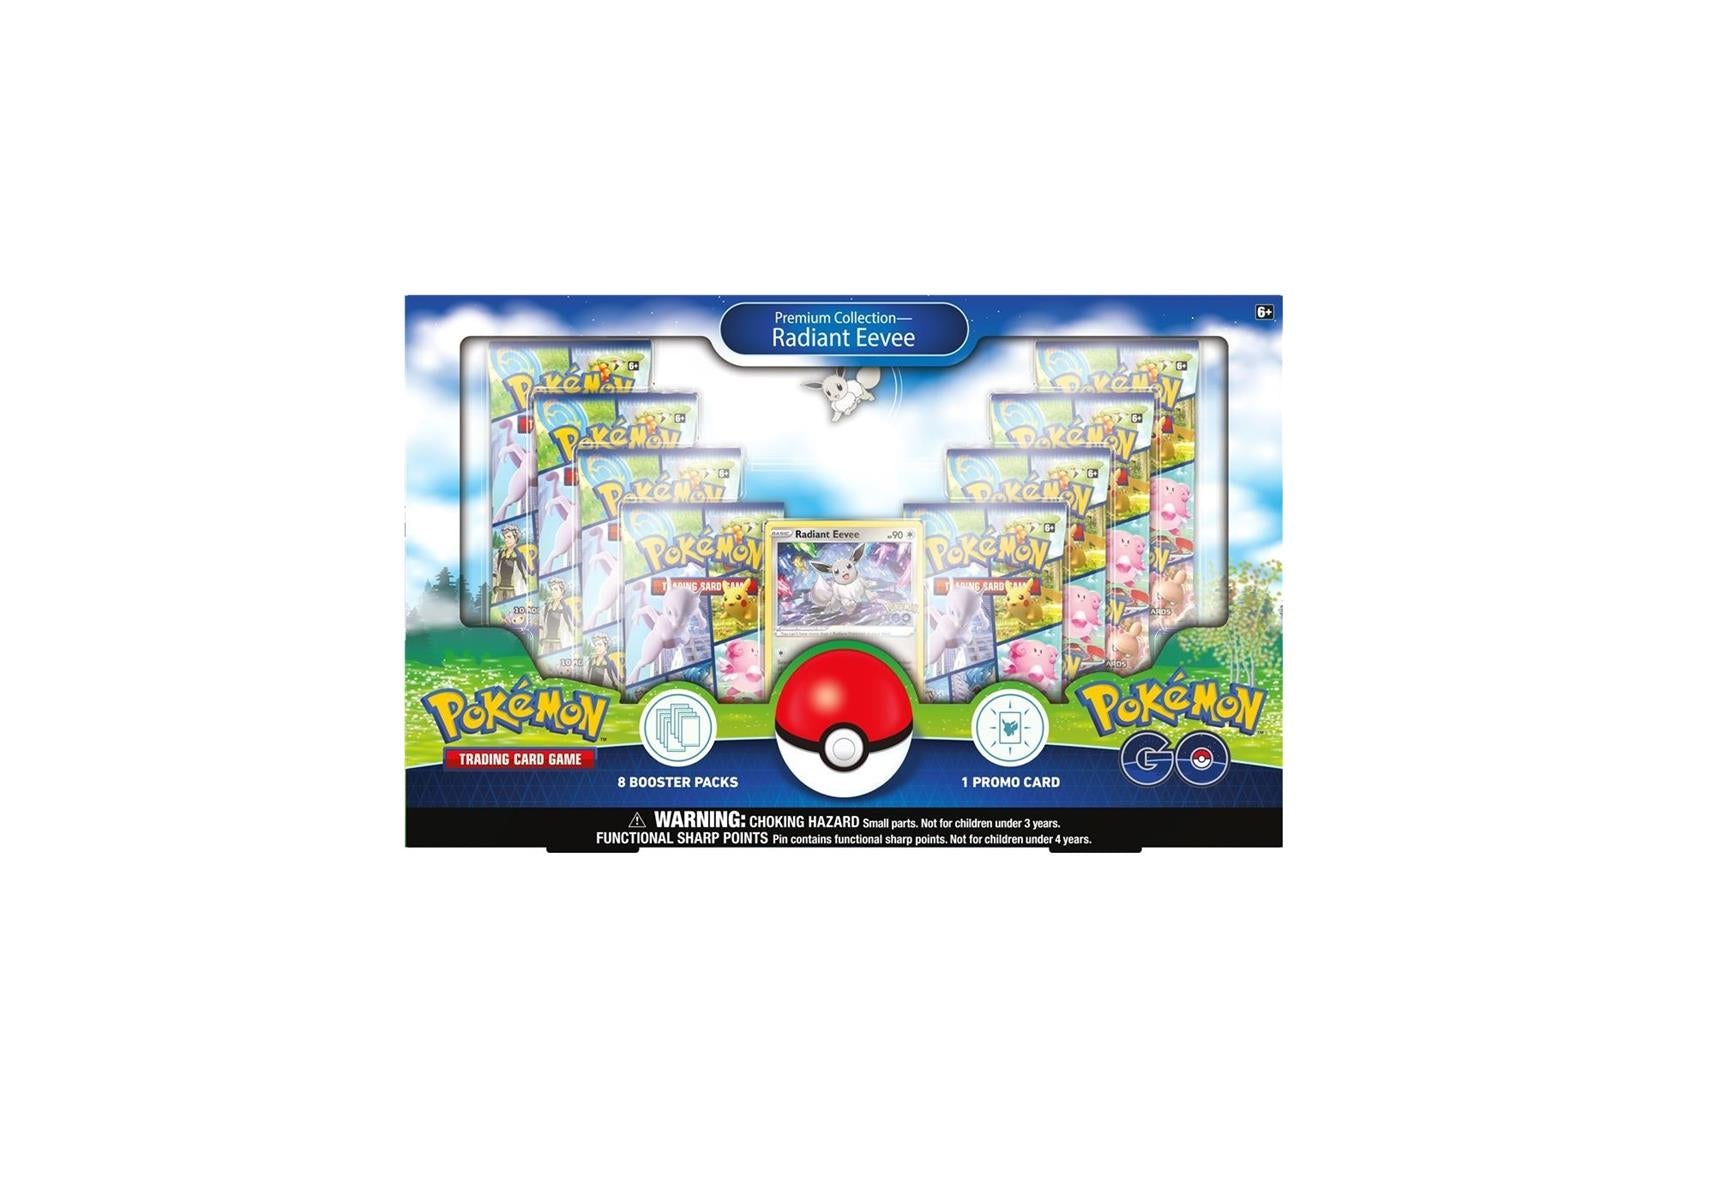 Pokémon GO Premium Collection Box Radiant Eevee - Pokémon Kaarten